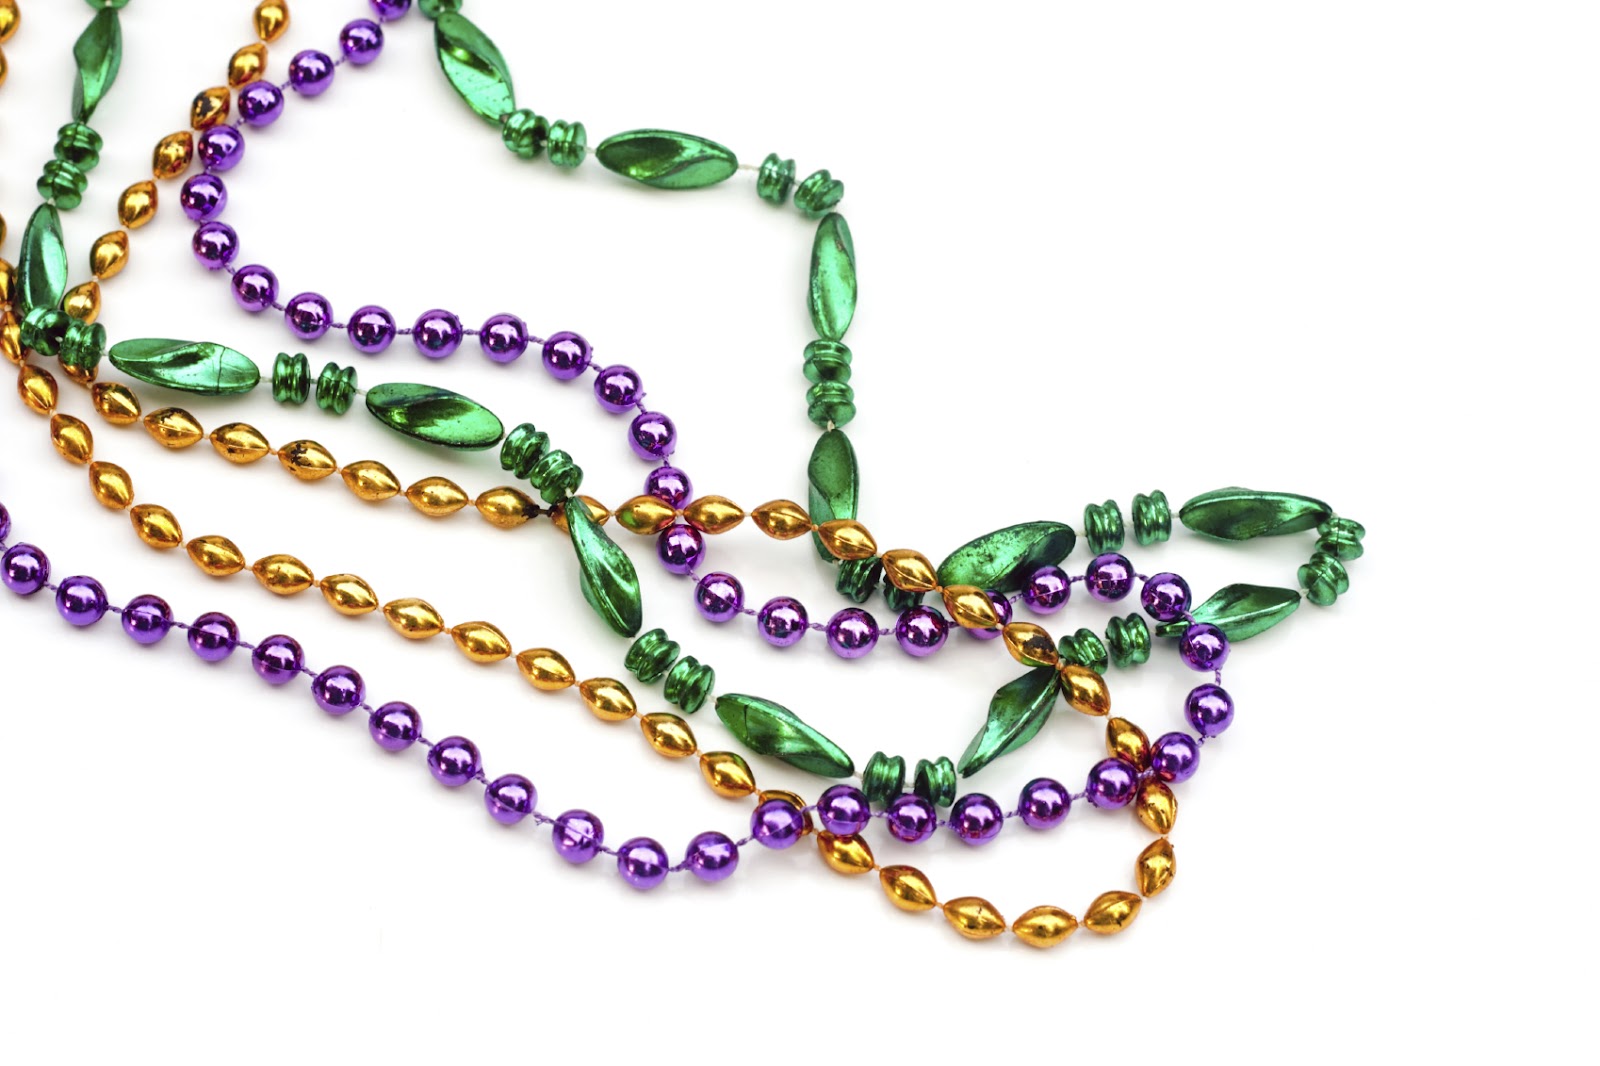 Mardi Gras Beads Vector at Vectorified.com | Collection of Mardi Gras ...